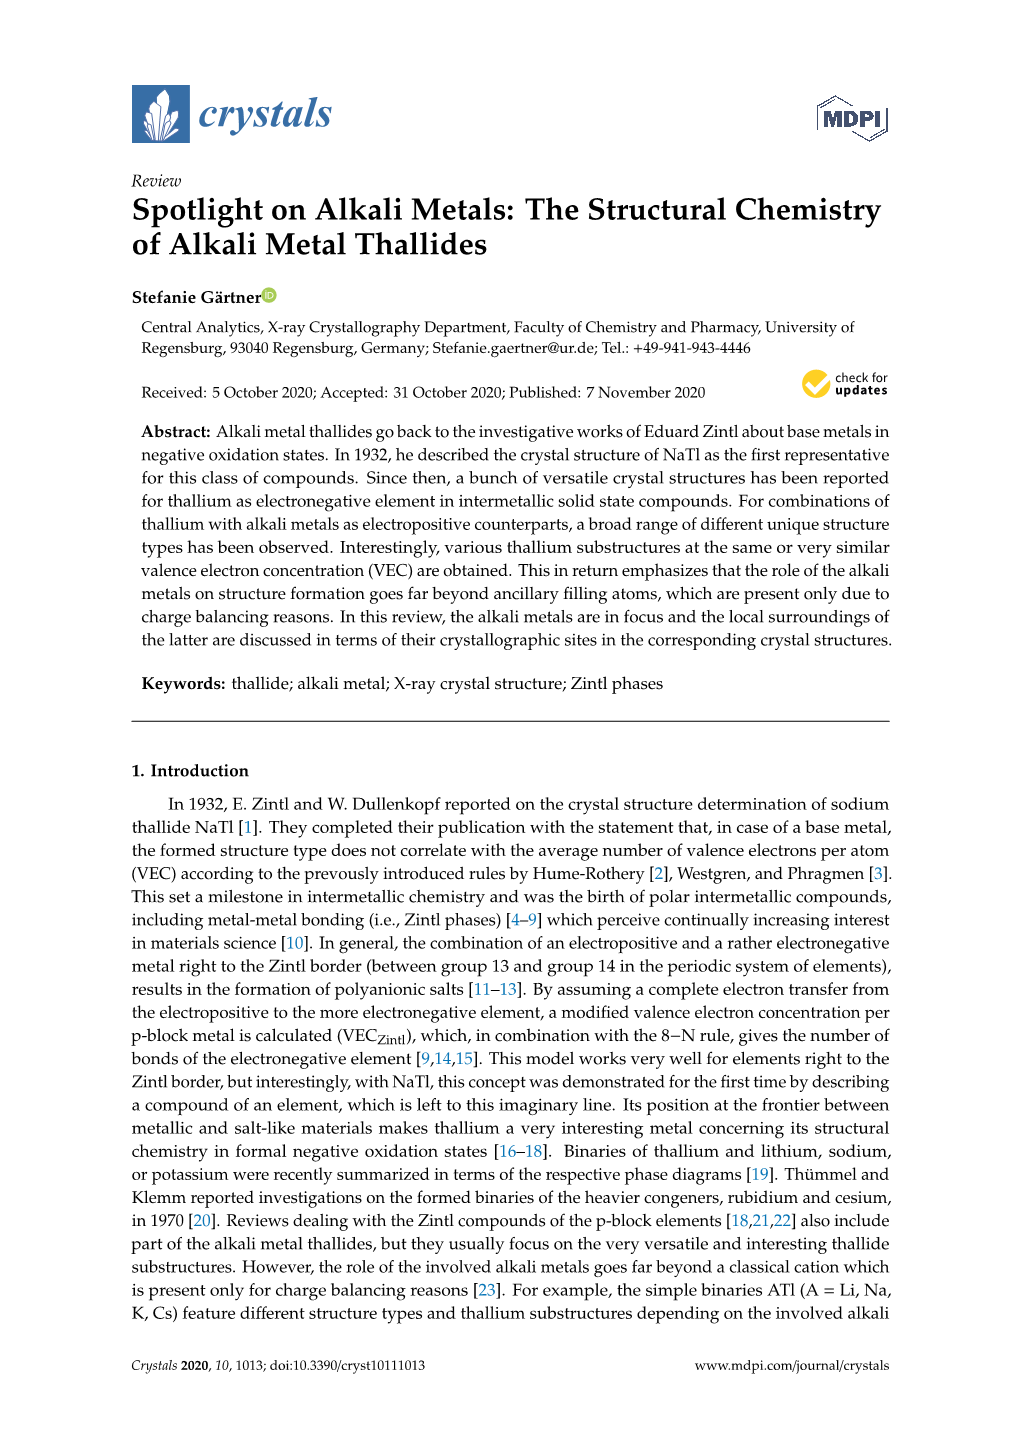 Spotlight on Alkali Metals: the Structural Chemistry of Alkali Metal Thallides